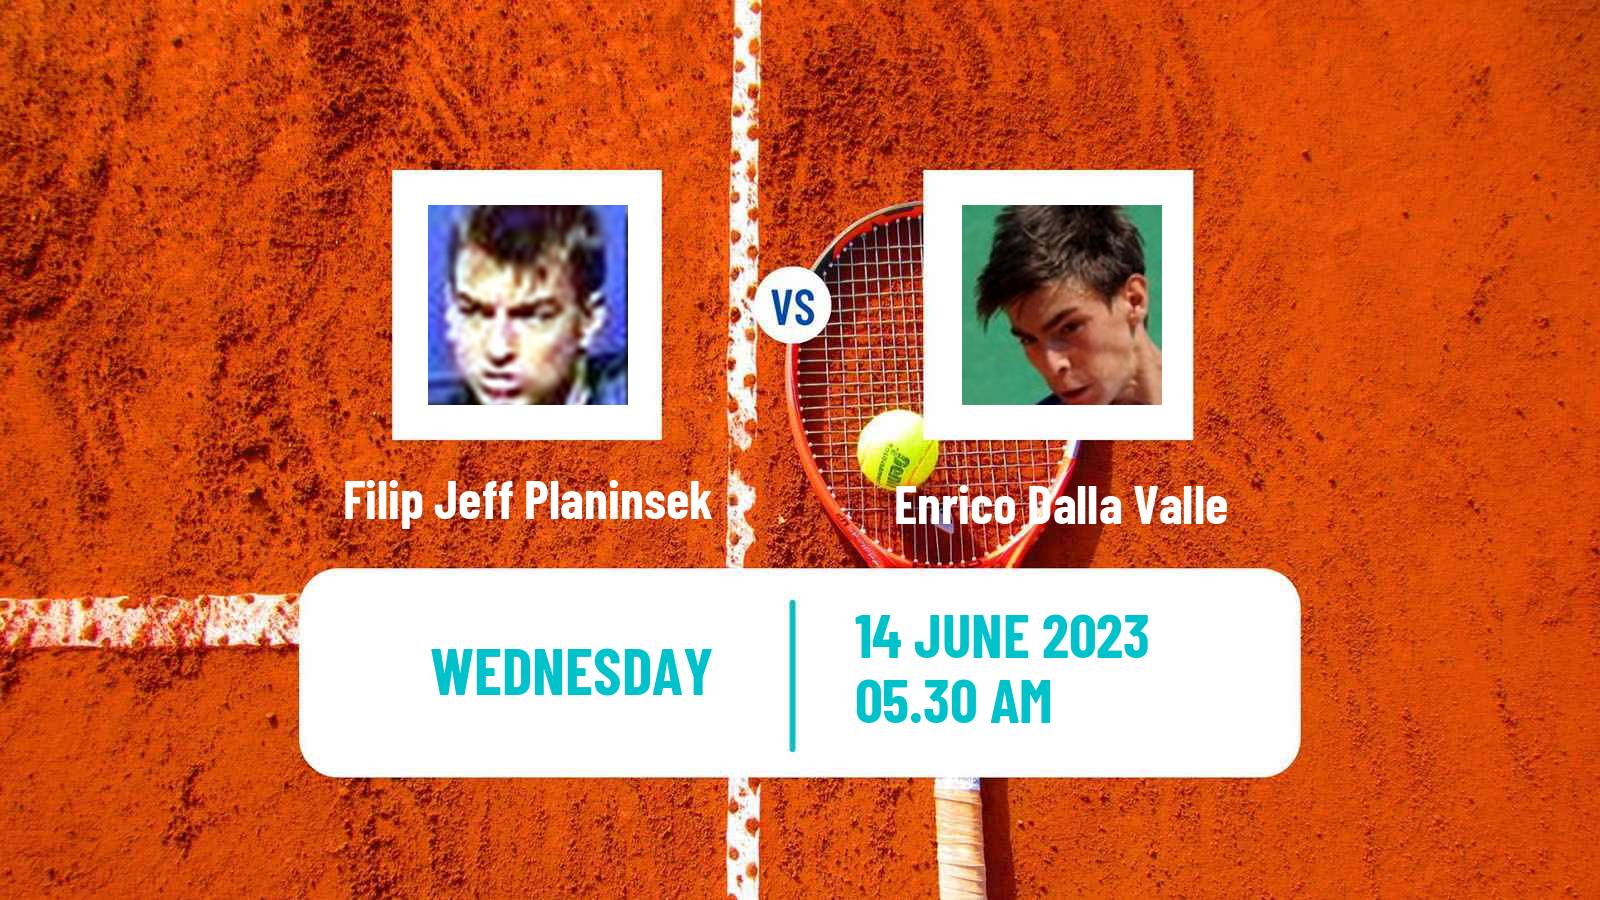 Tennis ITF M15 Litija Men Filip Jeff Planinsek - Enrico Dalla Valle